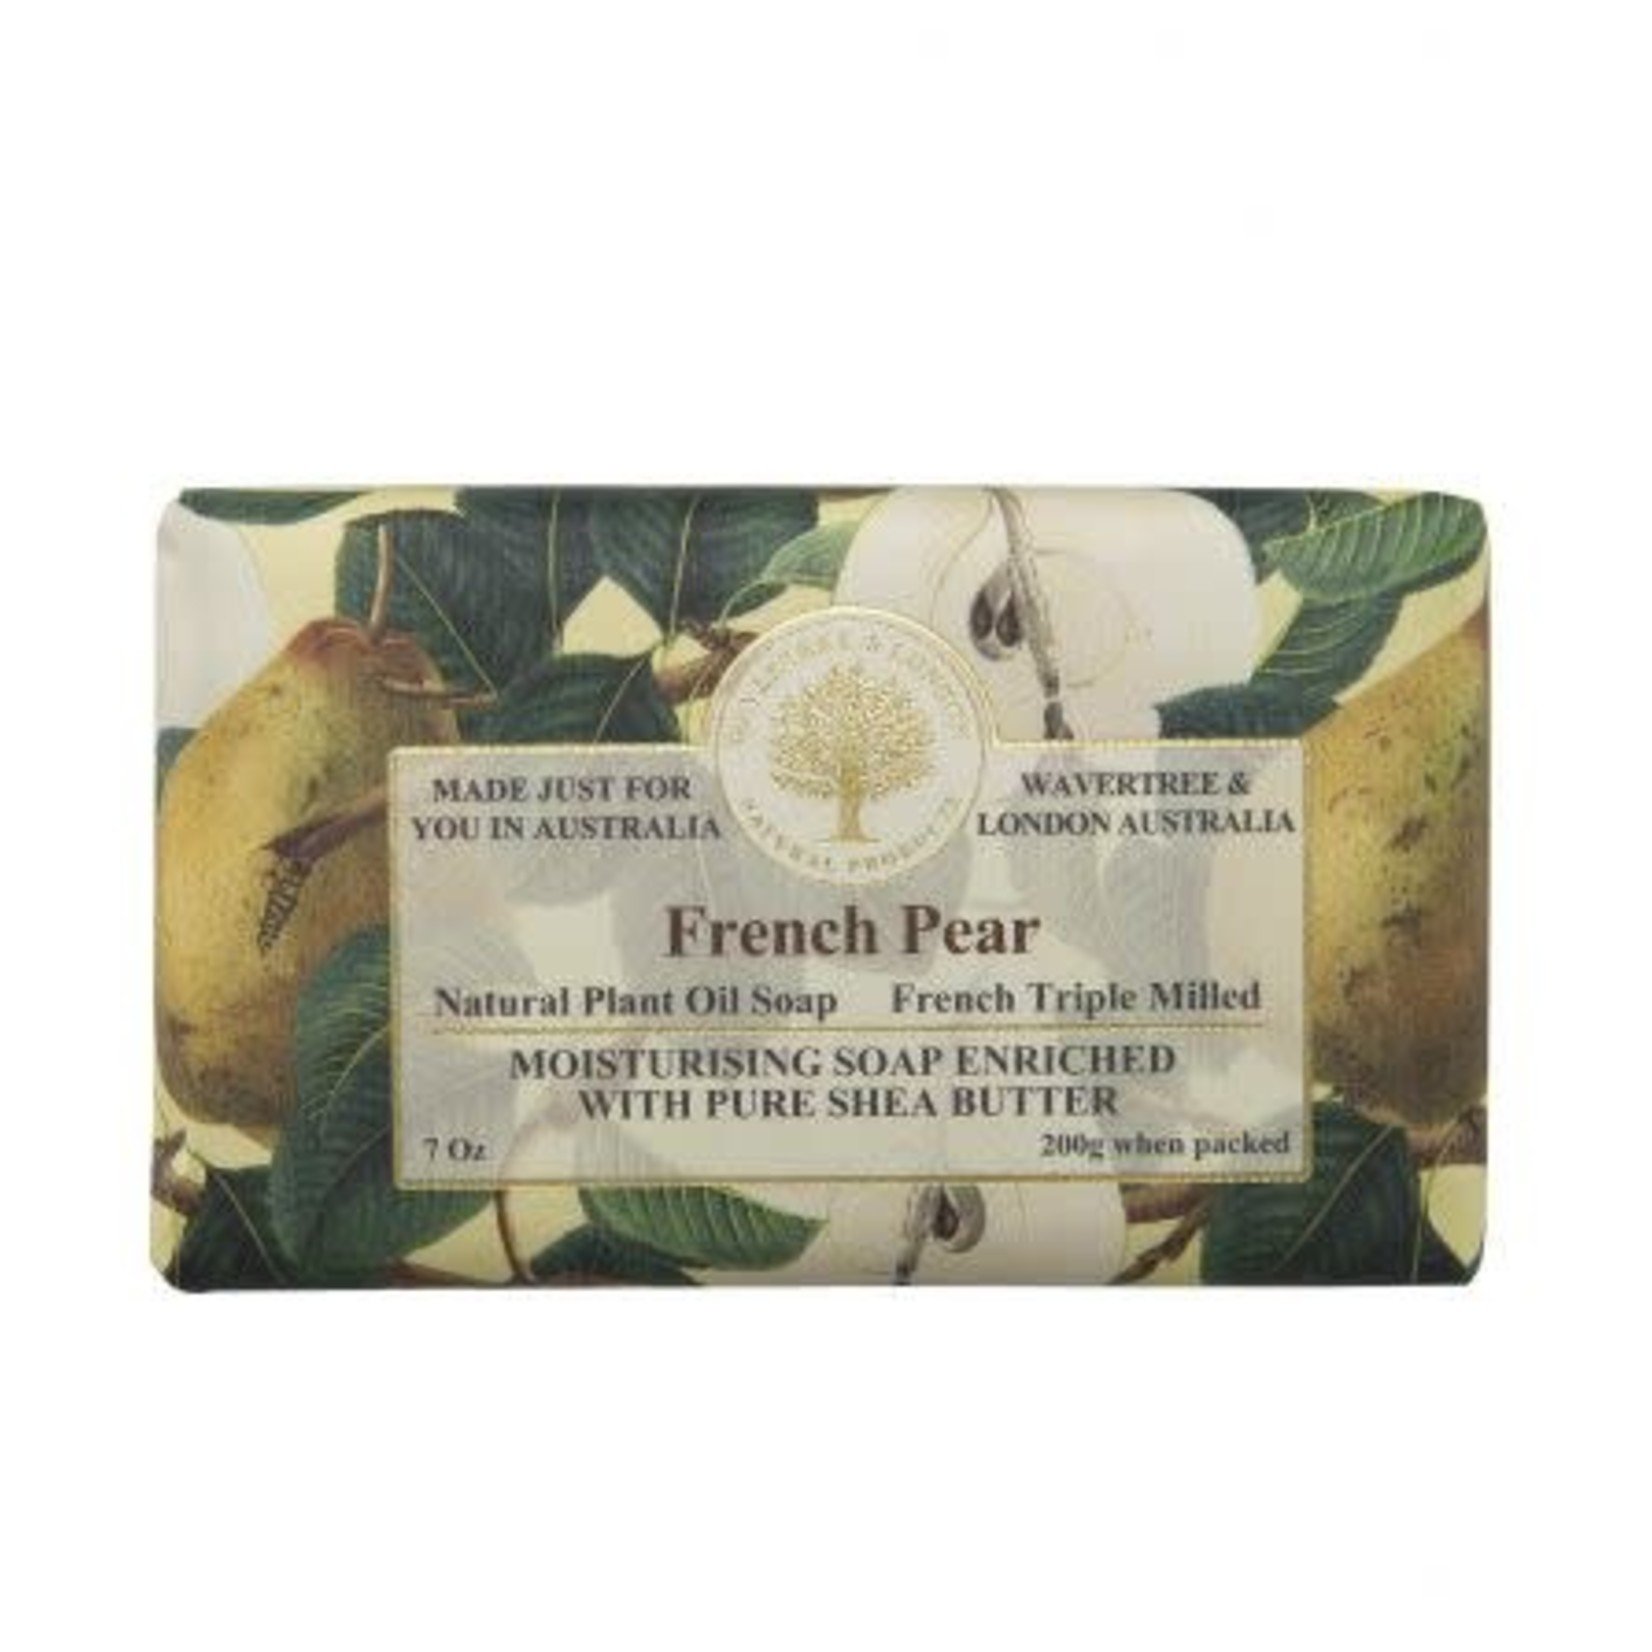 Wavertree & London Australia French Pear Soap 200g